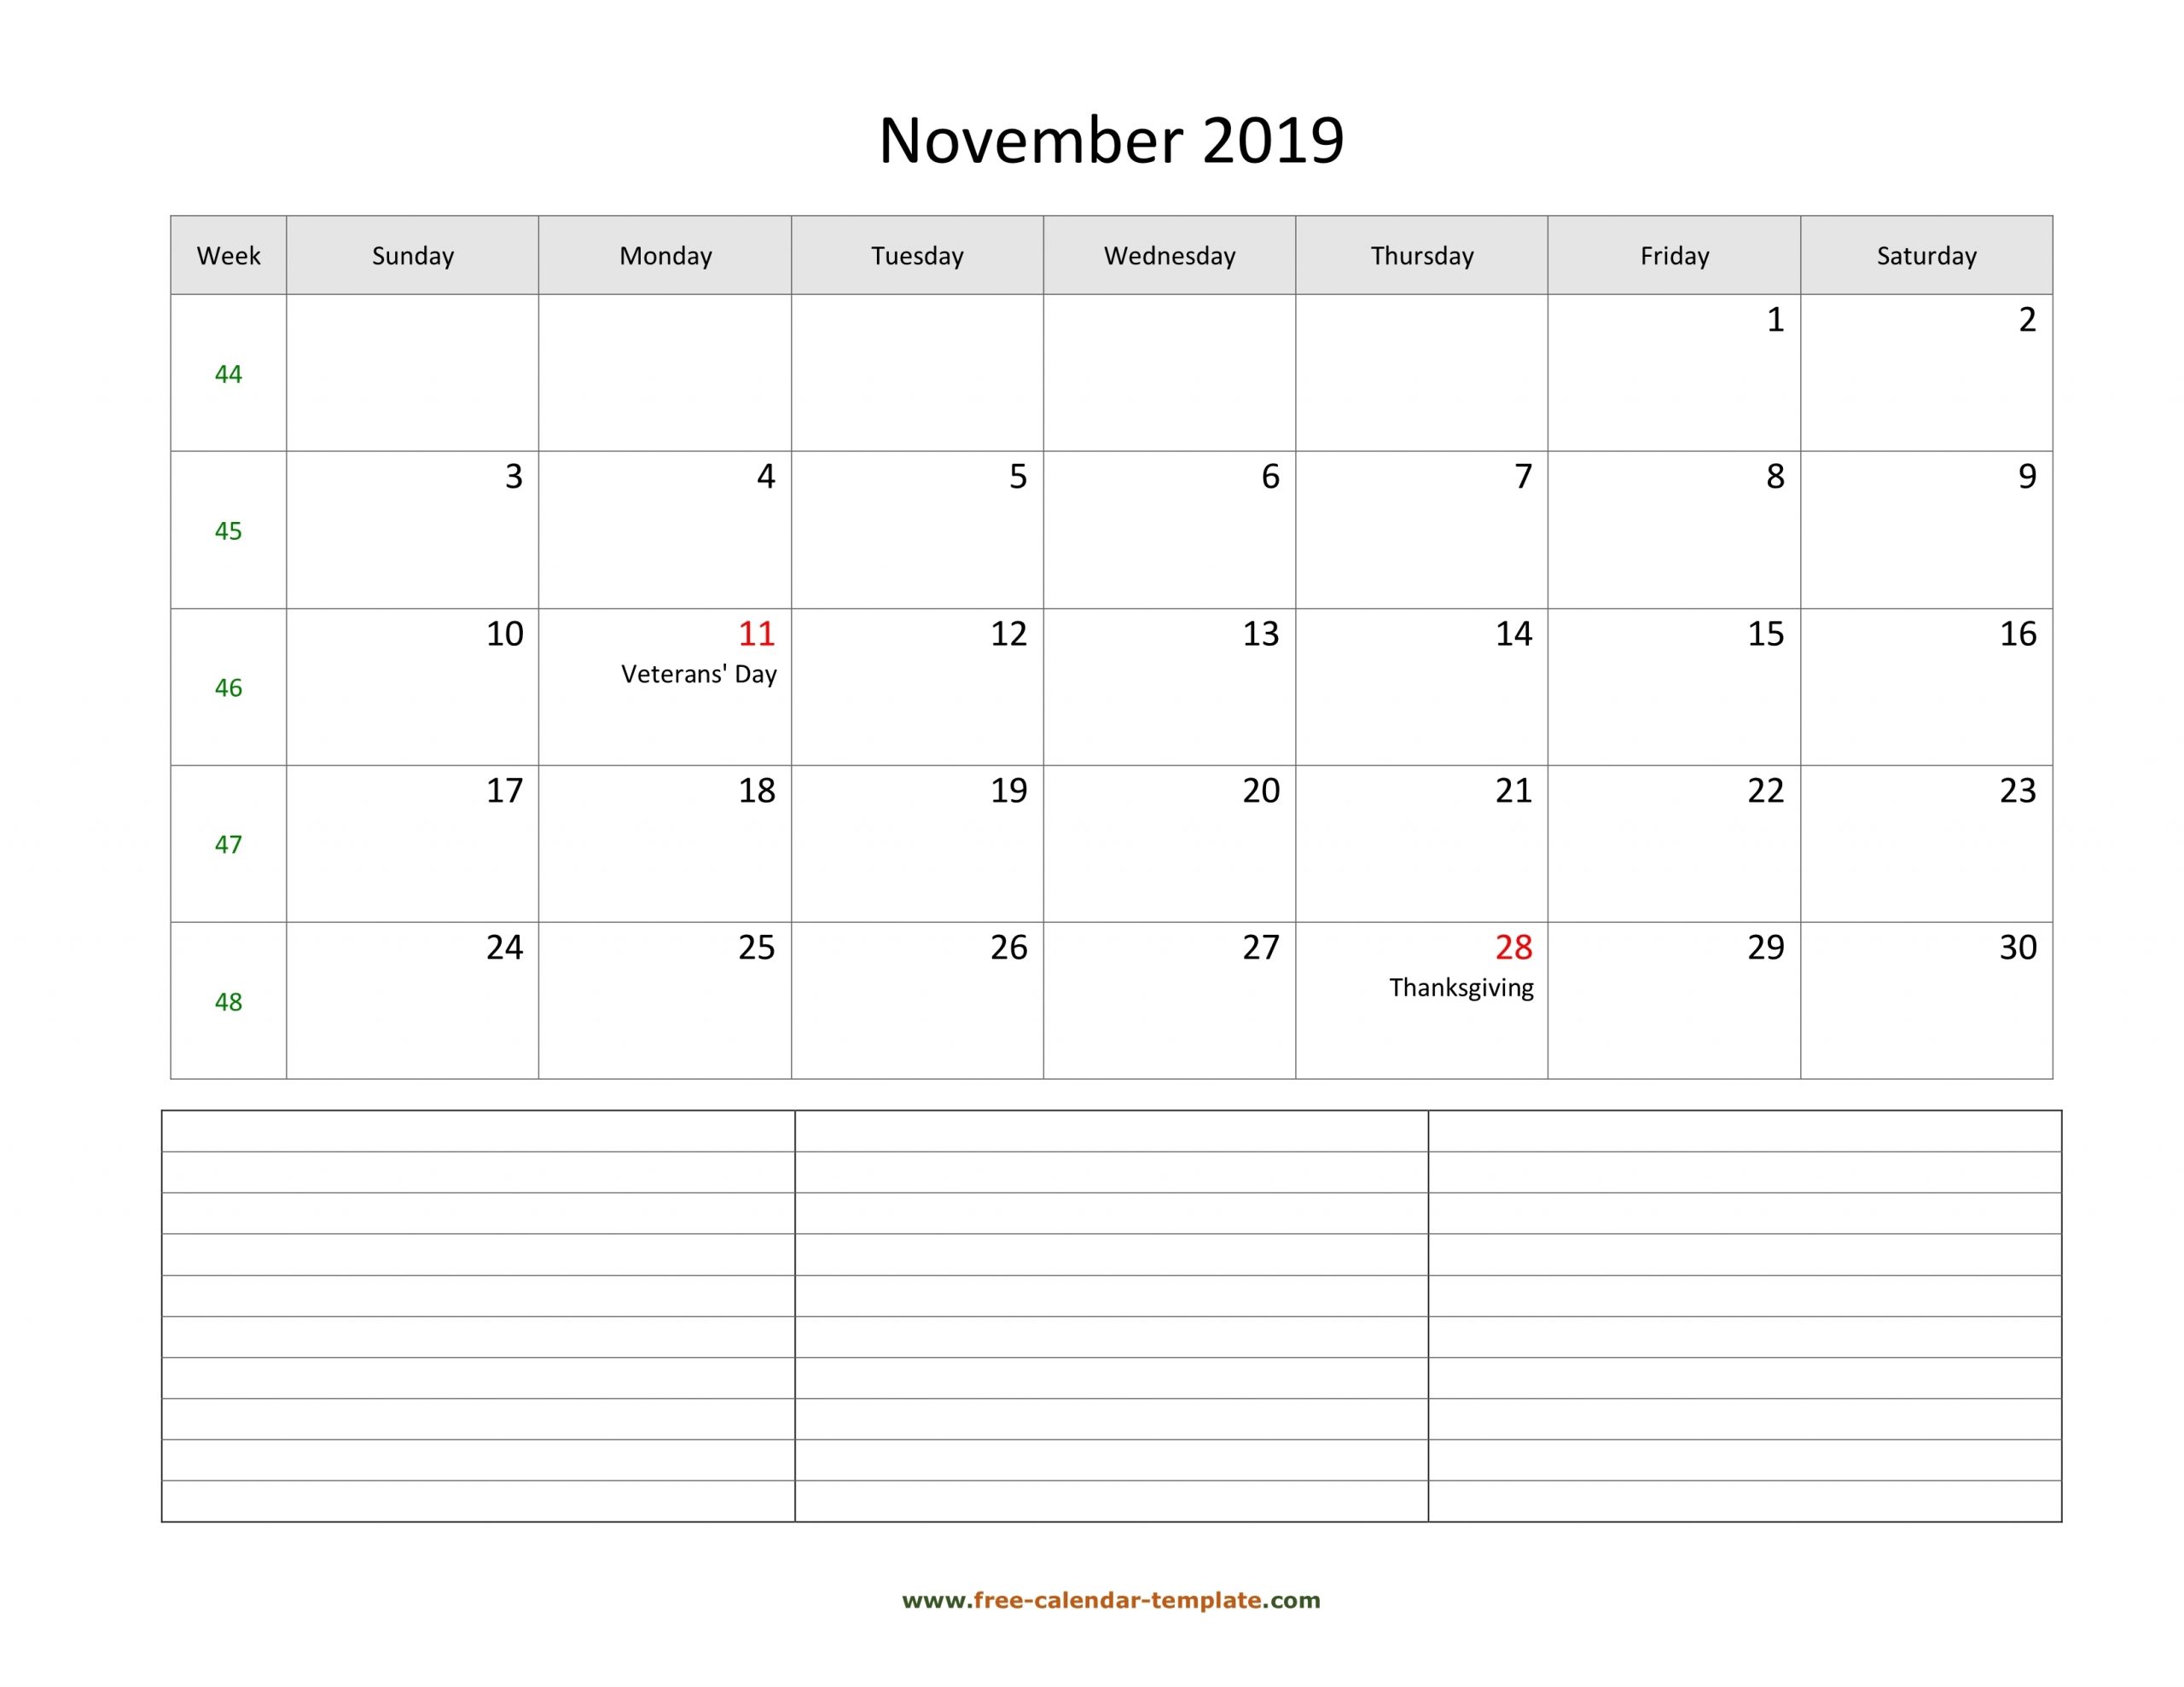 November 2019 Free Calendar Tempplate | Free-Calendar with Free 2019 Calendar With Space To Write